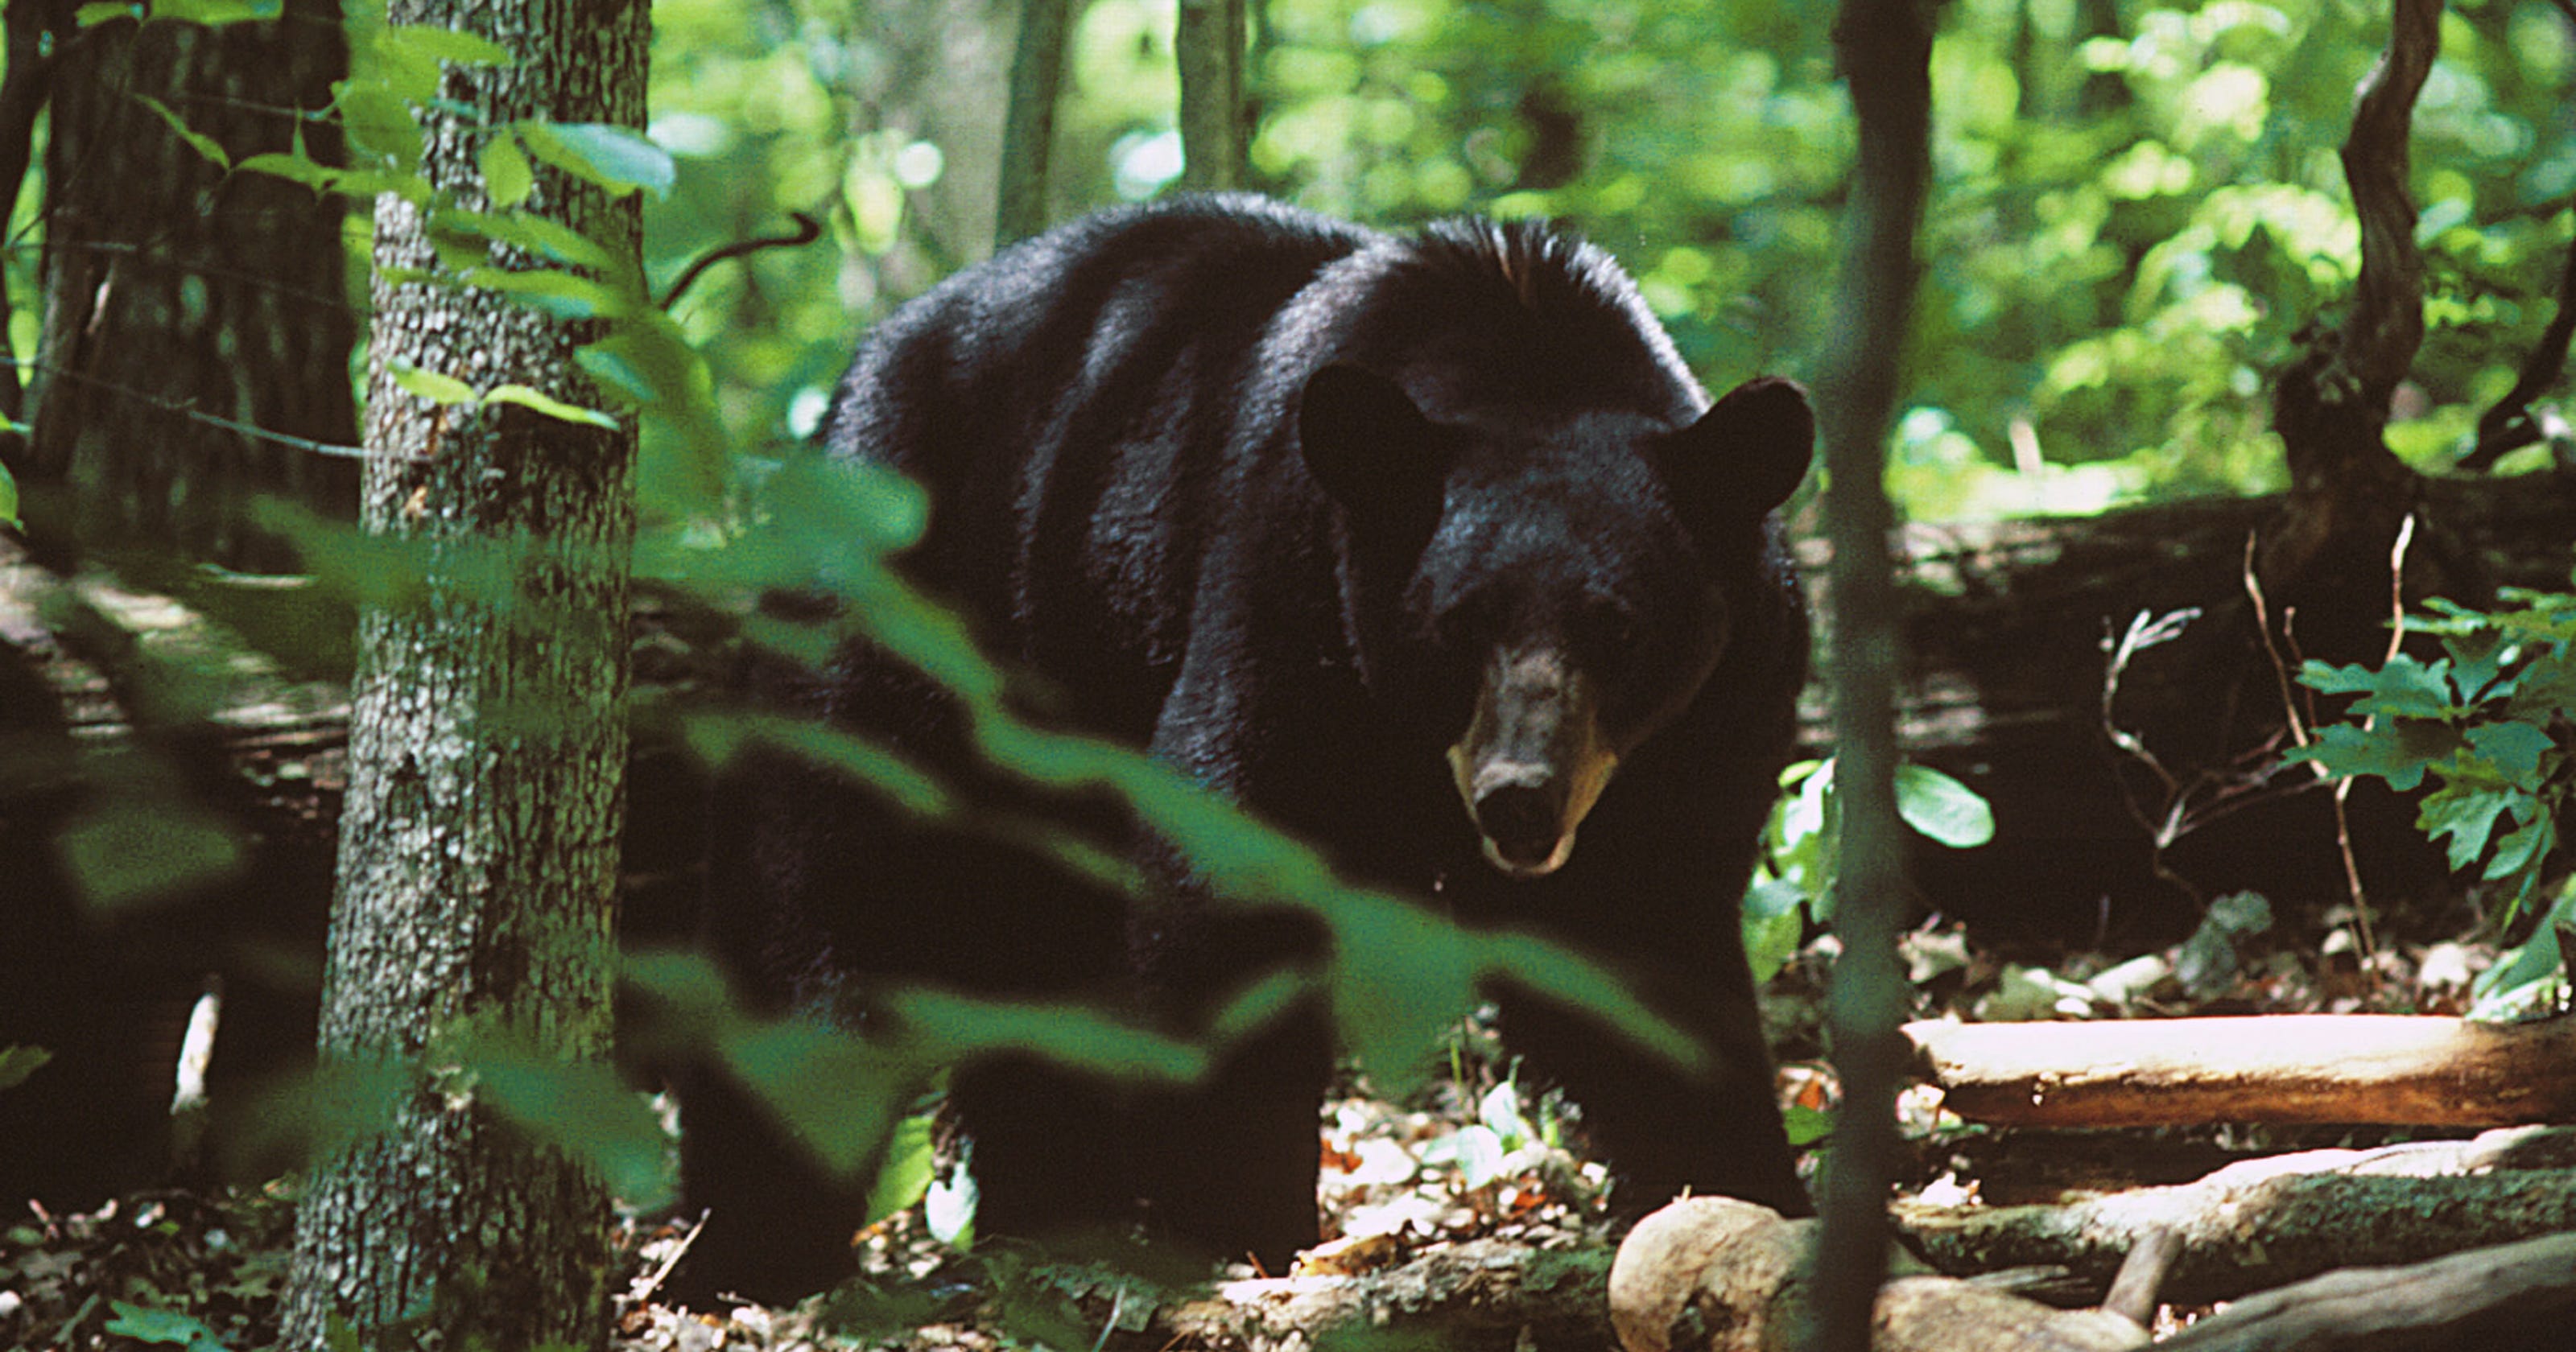 Bear hunting season in Western North Carolina opens Oct. 16